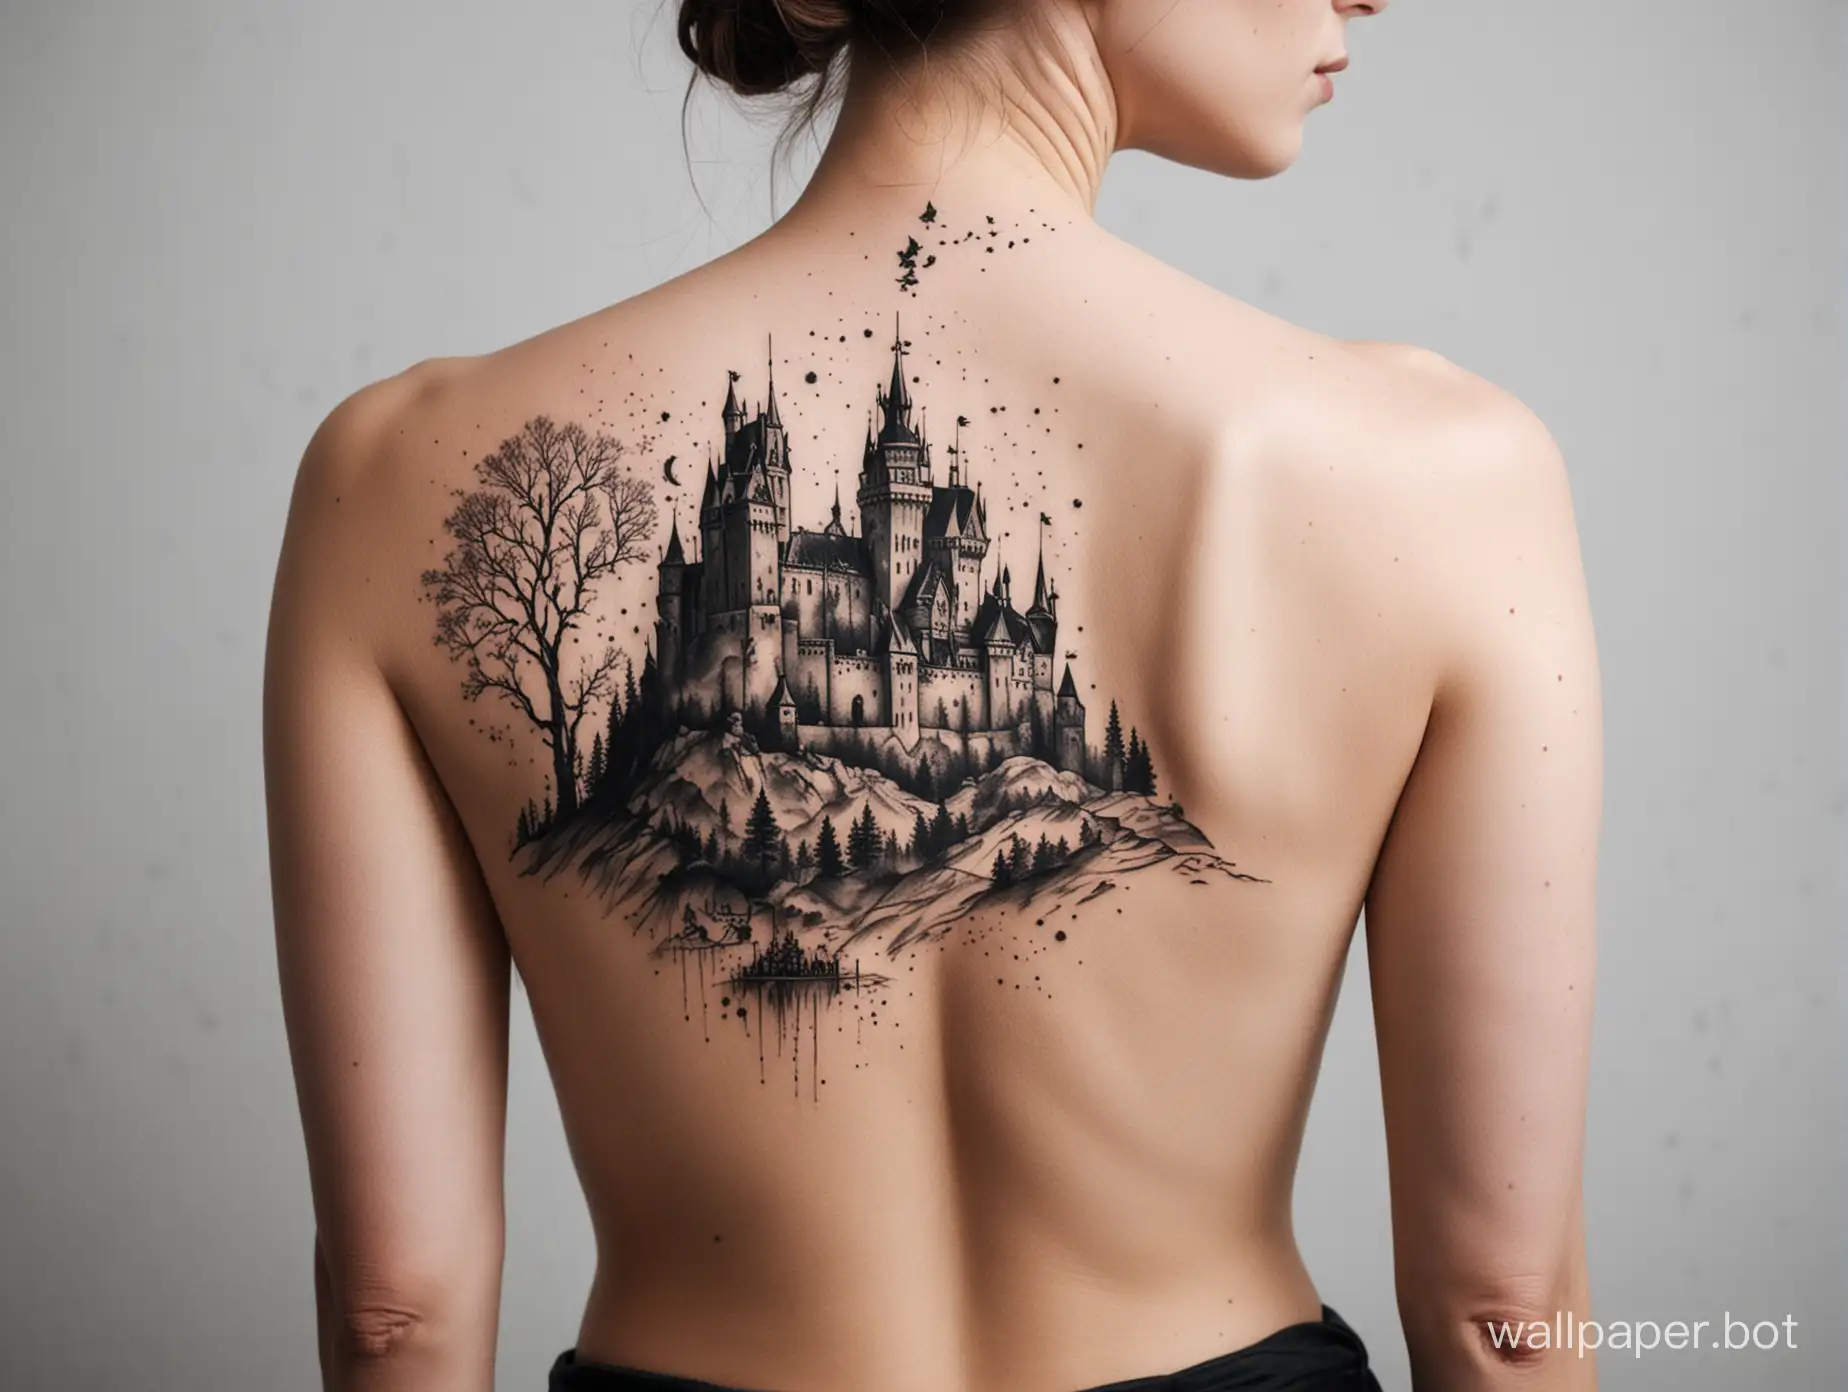 Masterpiece Nordic tattoo, showing back tattoo, darkness blackwork, minimalistic castle, dot work, studio photo, white background